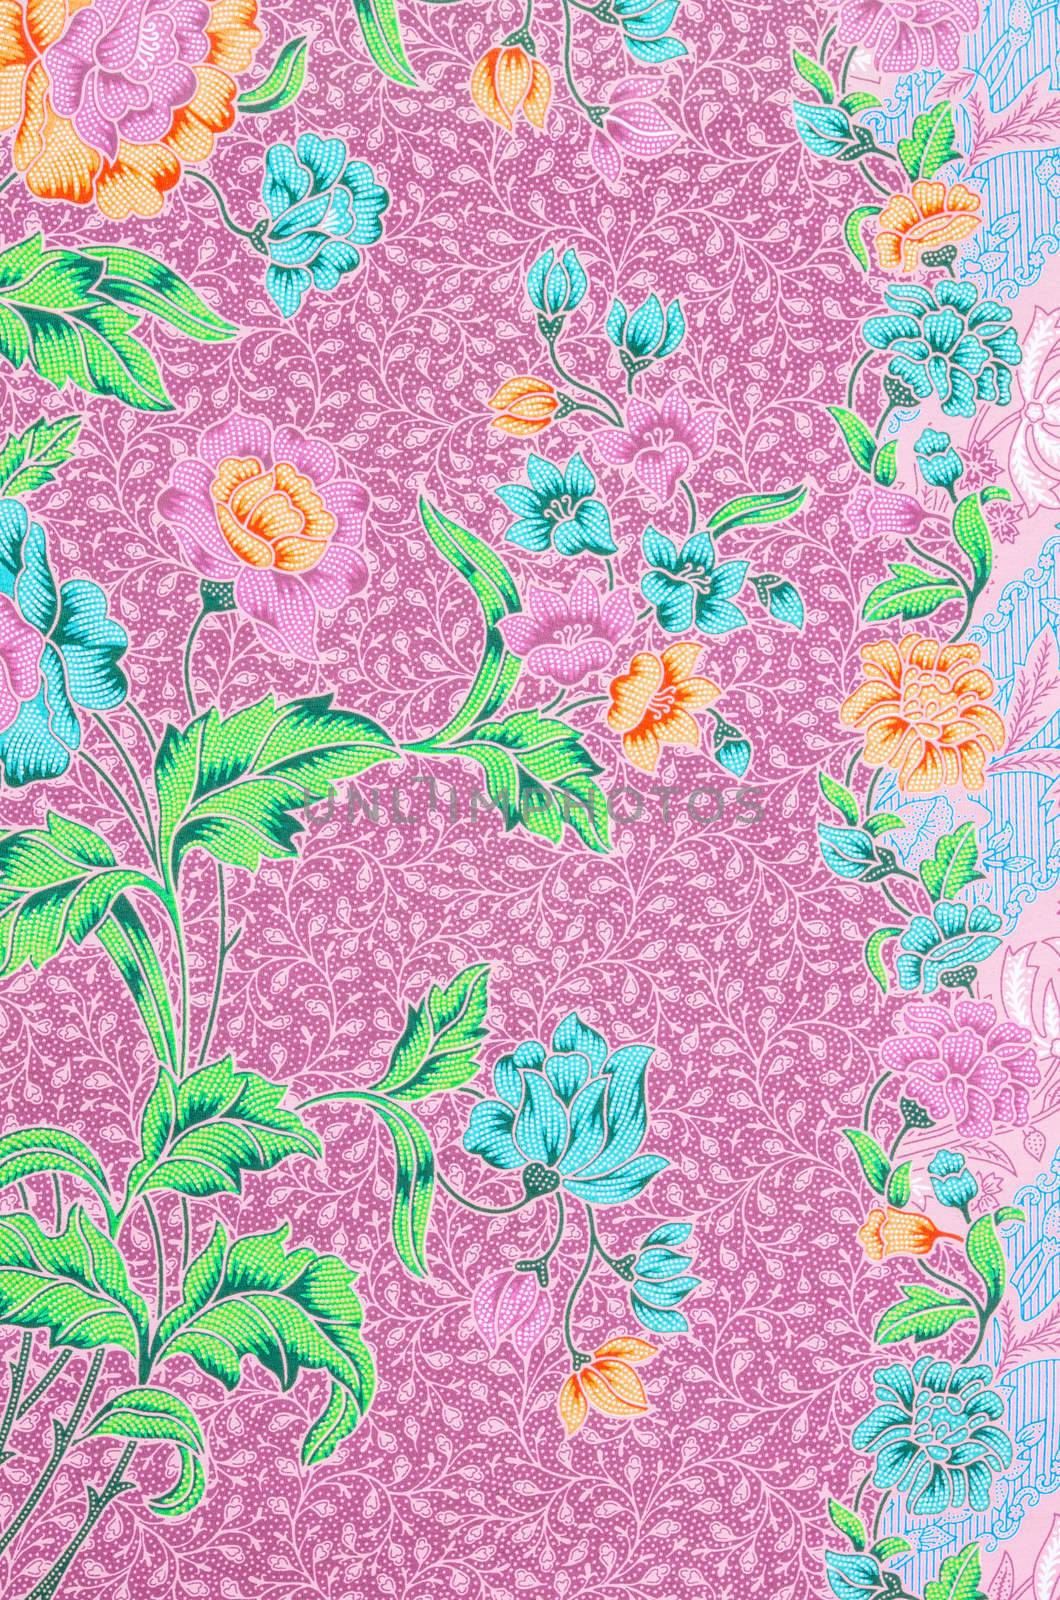 Colorful batik cloth fabric pattern. by Gamjai